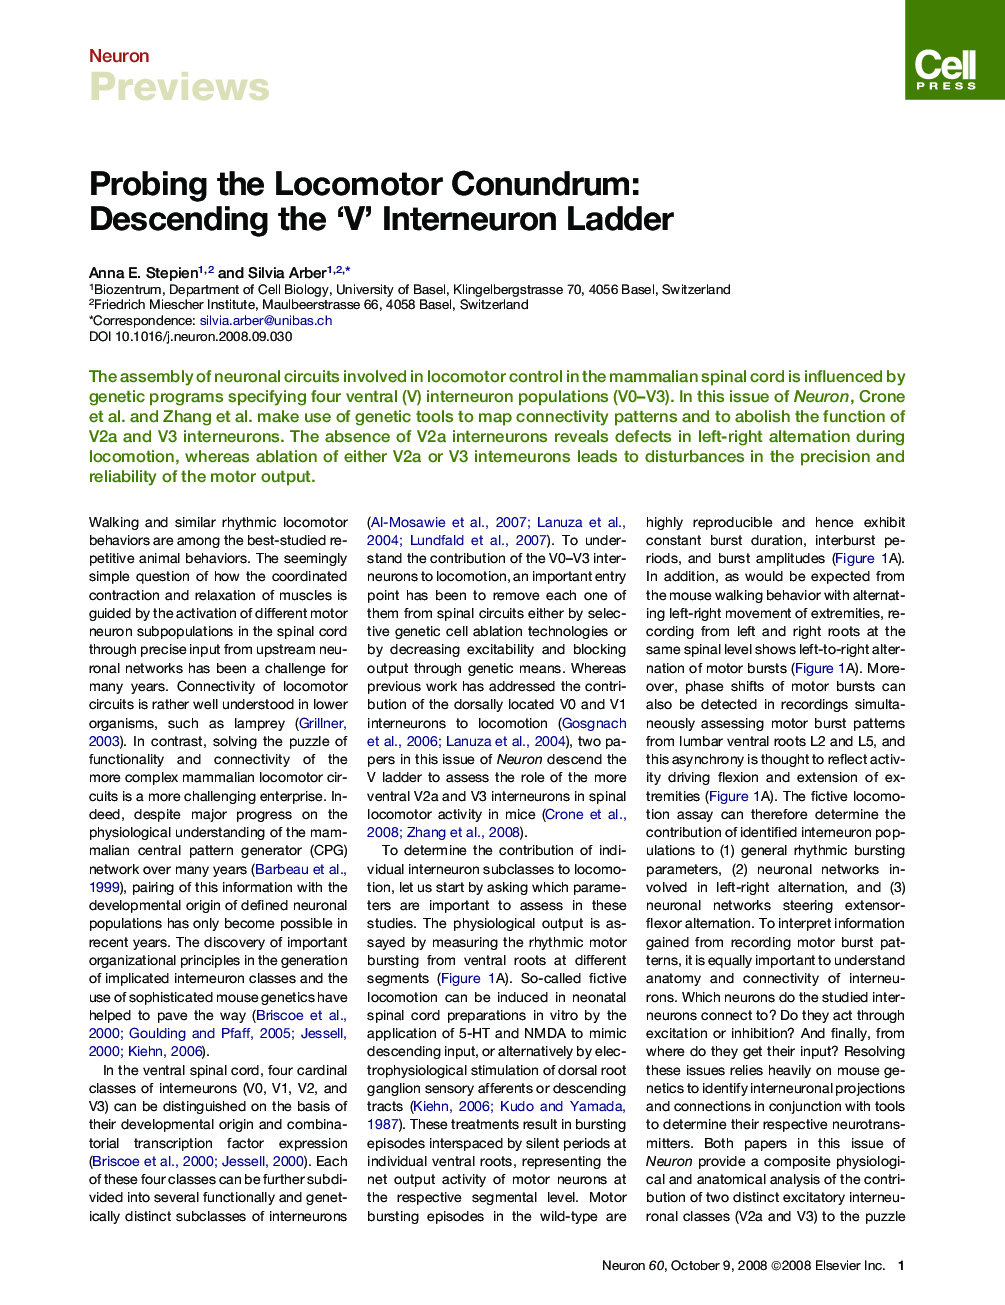 Probing the Locomotor Conundrum: Descending the ‘V’ Interneuron Ladder